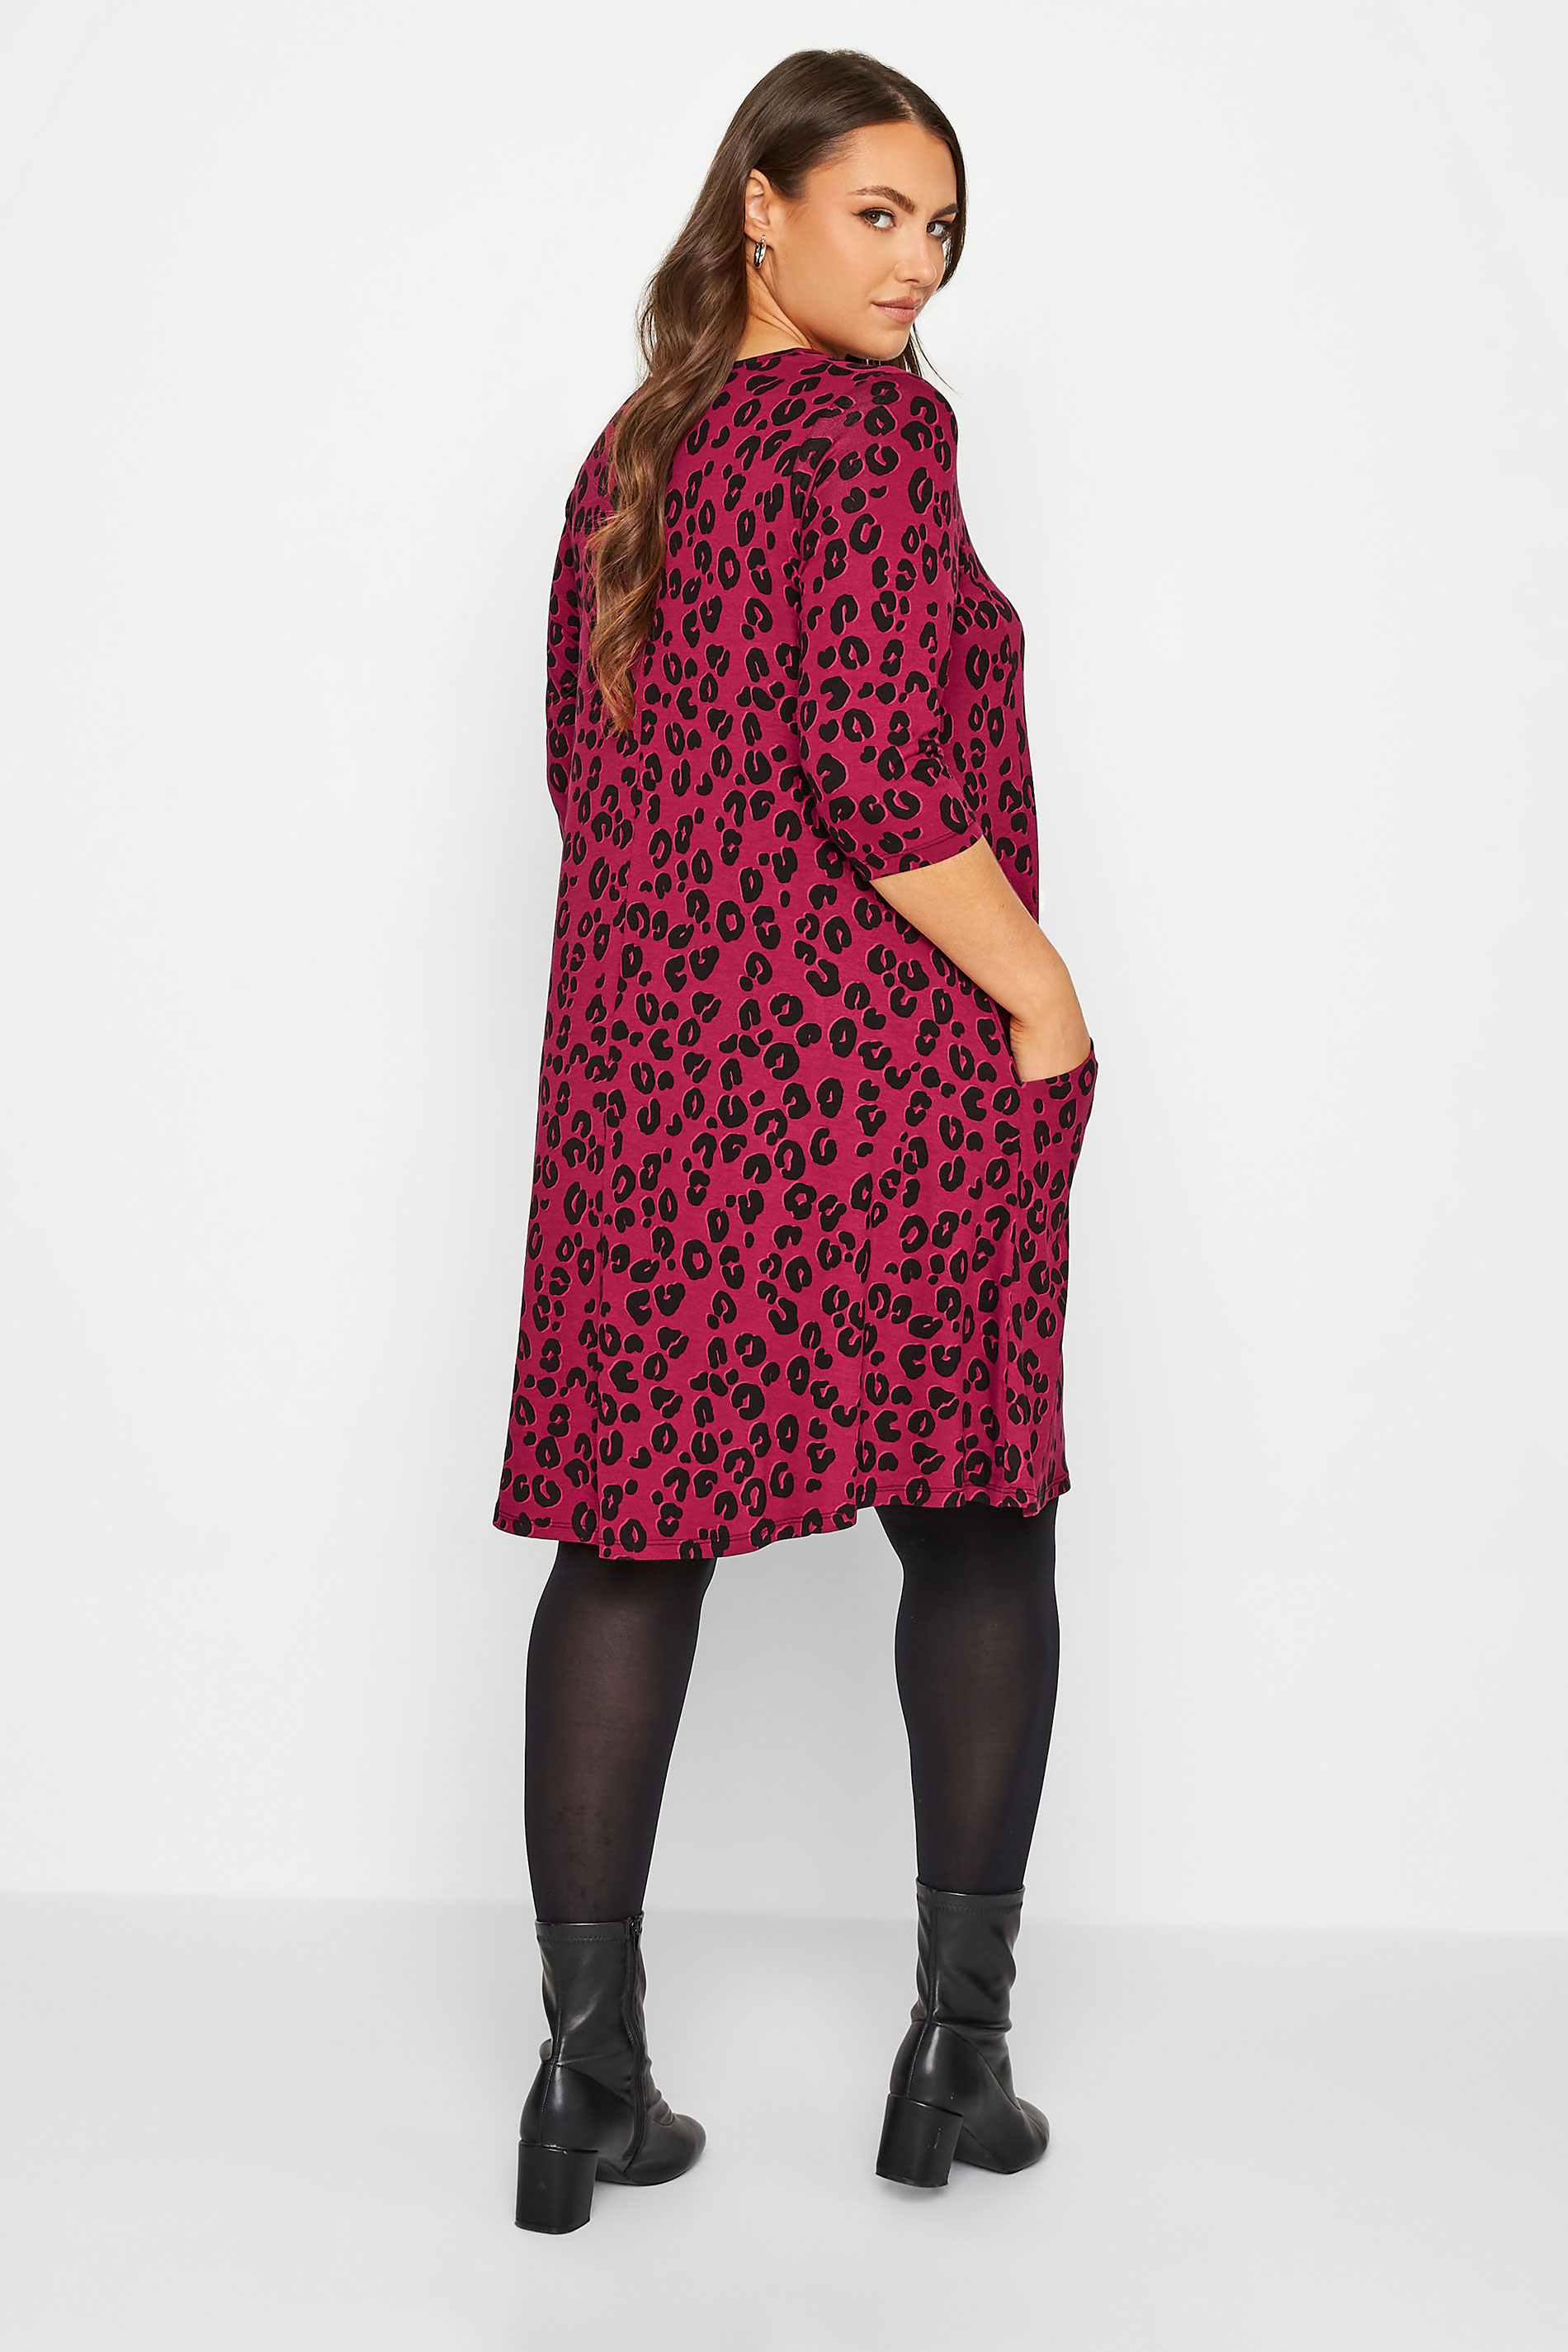 Plus Size Red Leopard Print Drape Pocket Dress | Yours Clothing 3